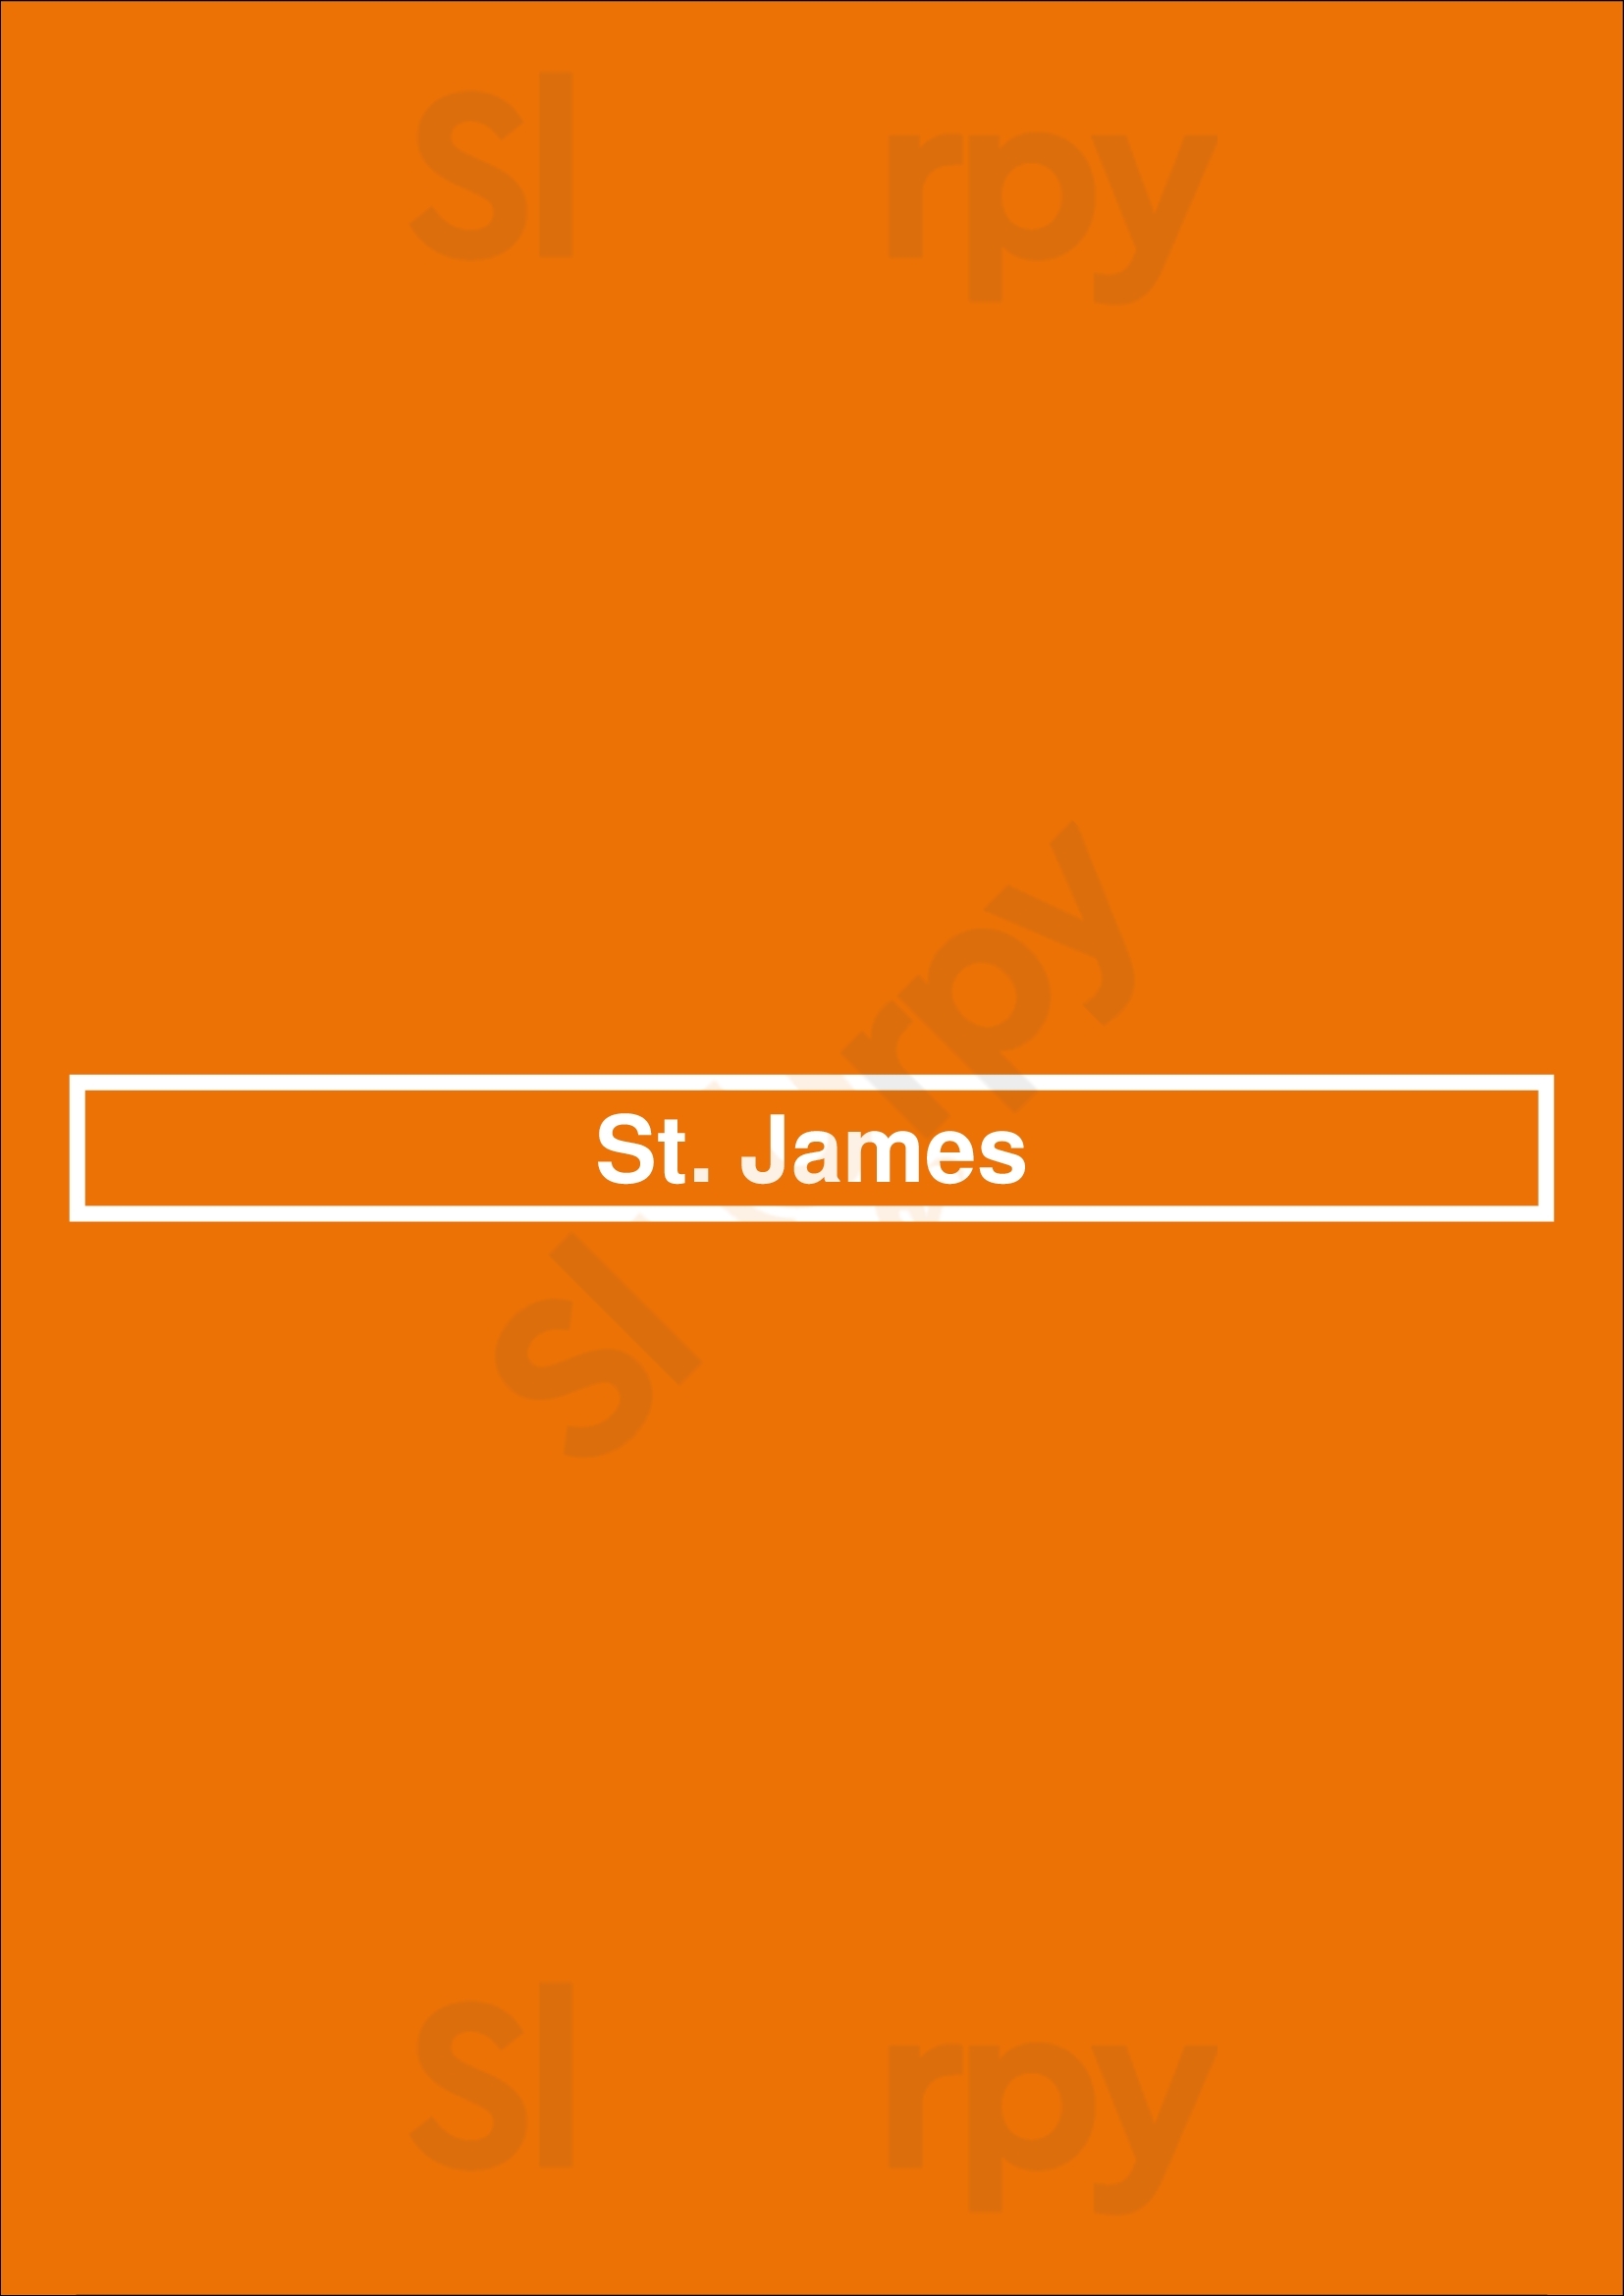 St. James Madrid Menu - 1